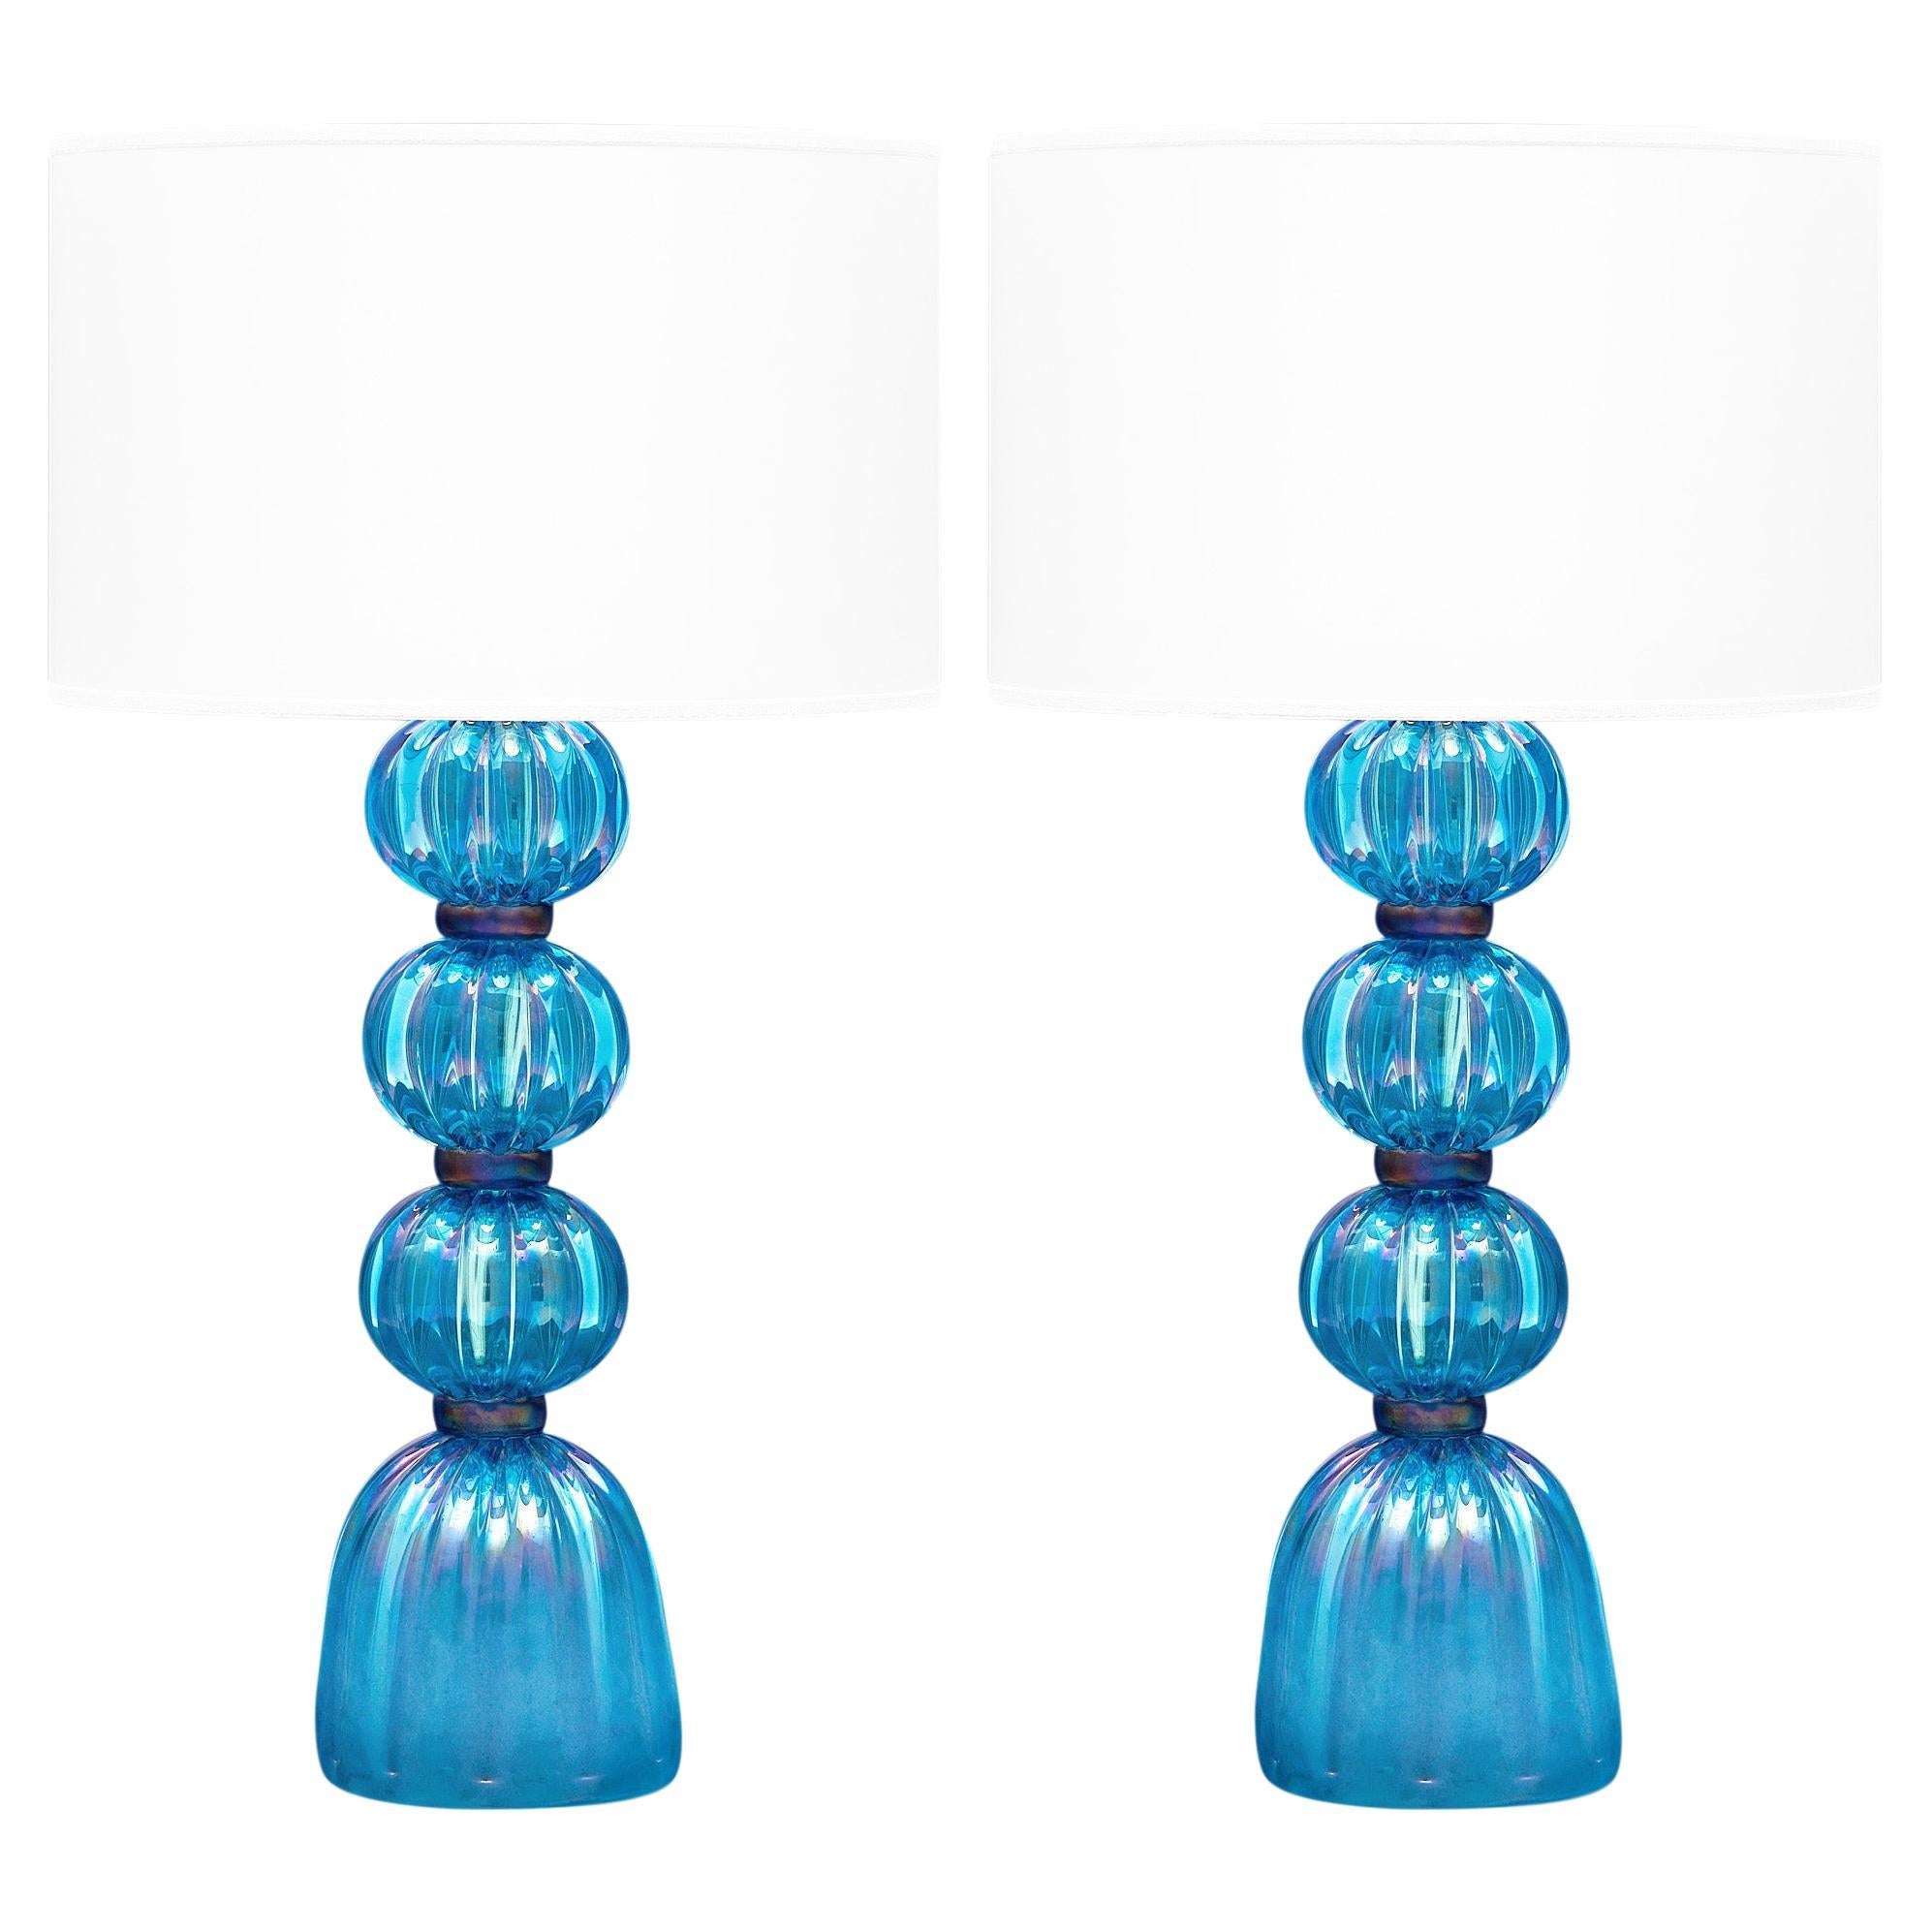 Schillerndes blaues Murano Glas Lampen